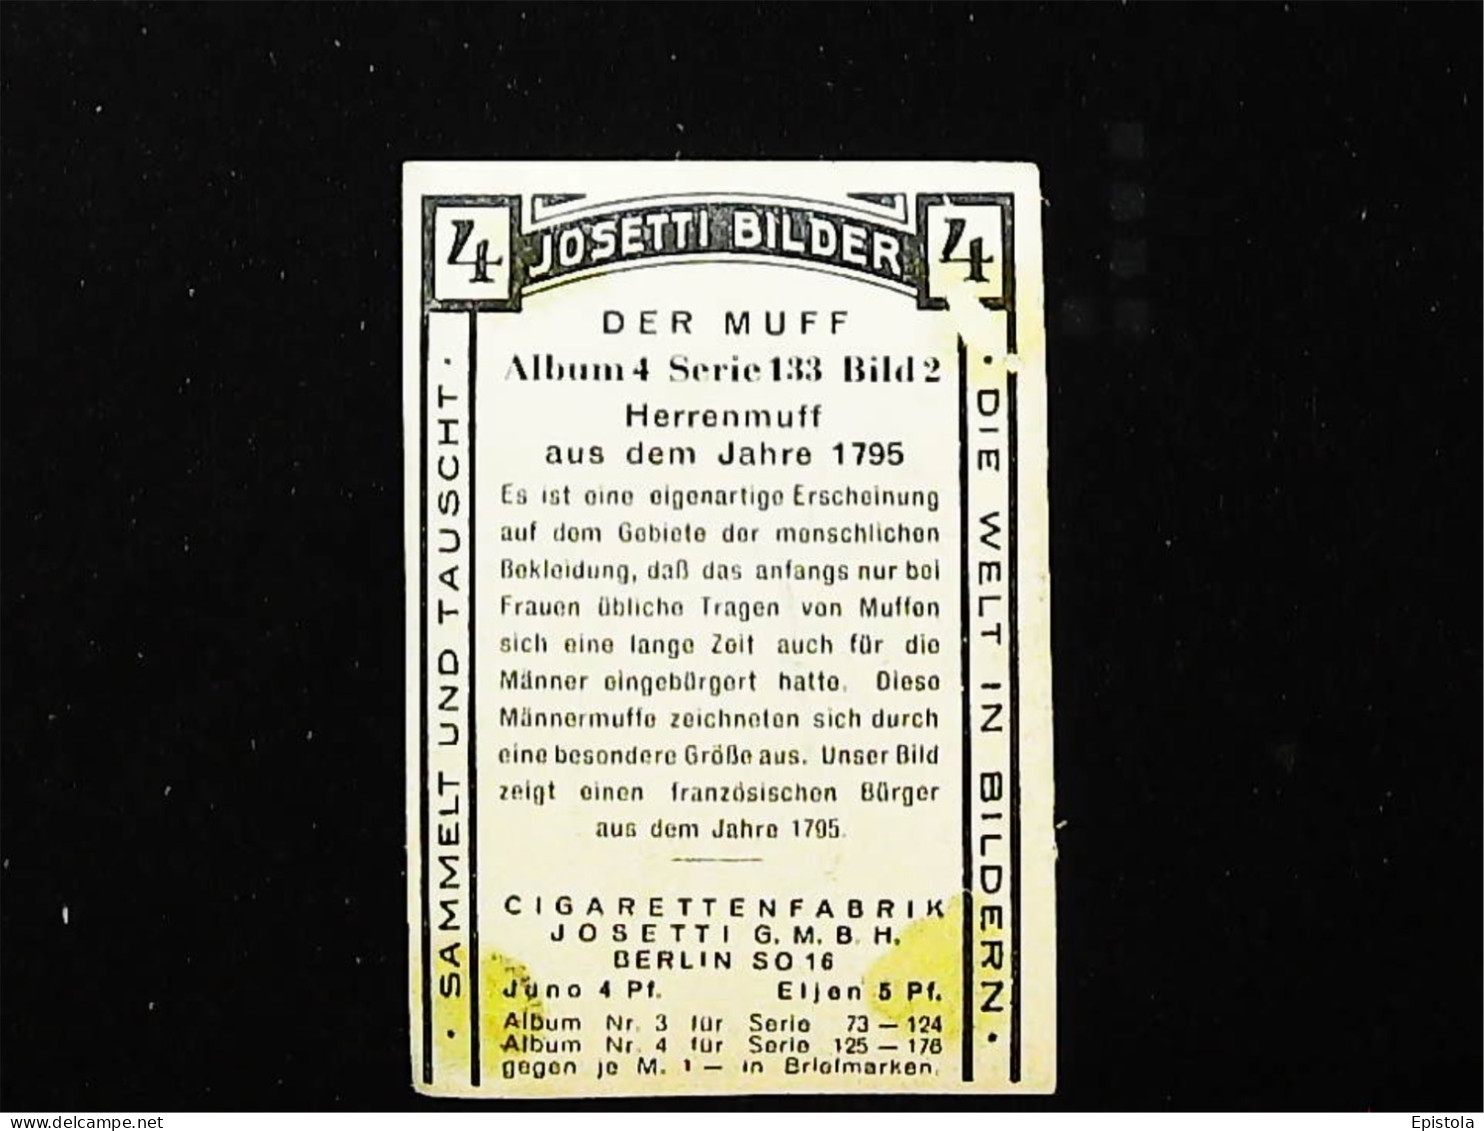 ► MODE Du Manchon Allemagne En 1795 - Chromo-Image Cigarette Josetti Bilder Berlin Album 4 1920's - Otras Marcas